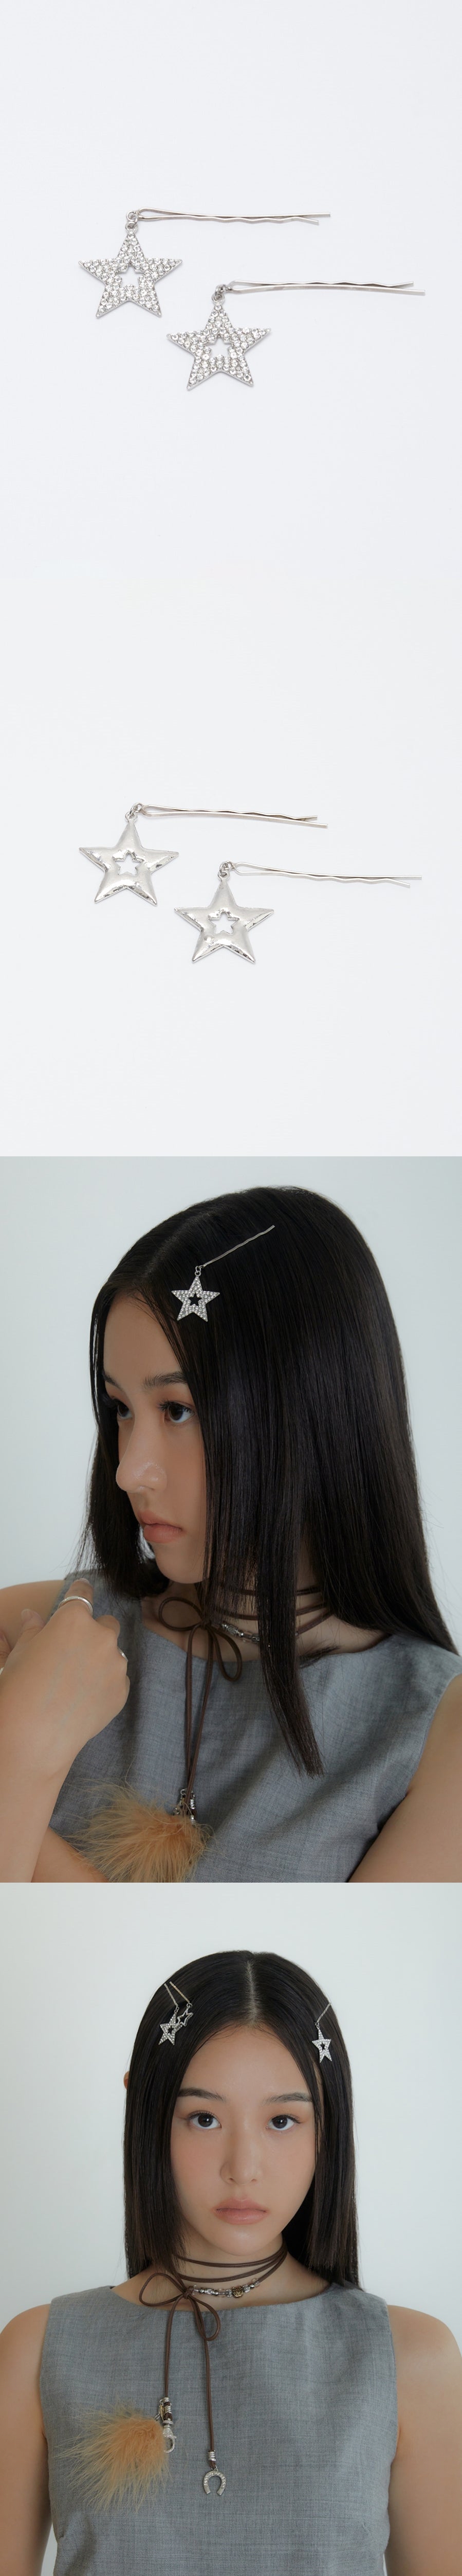 BIG STAR HAIR CLIP (2 pcs)